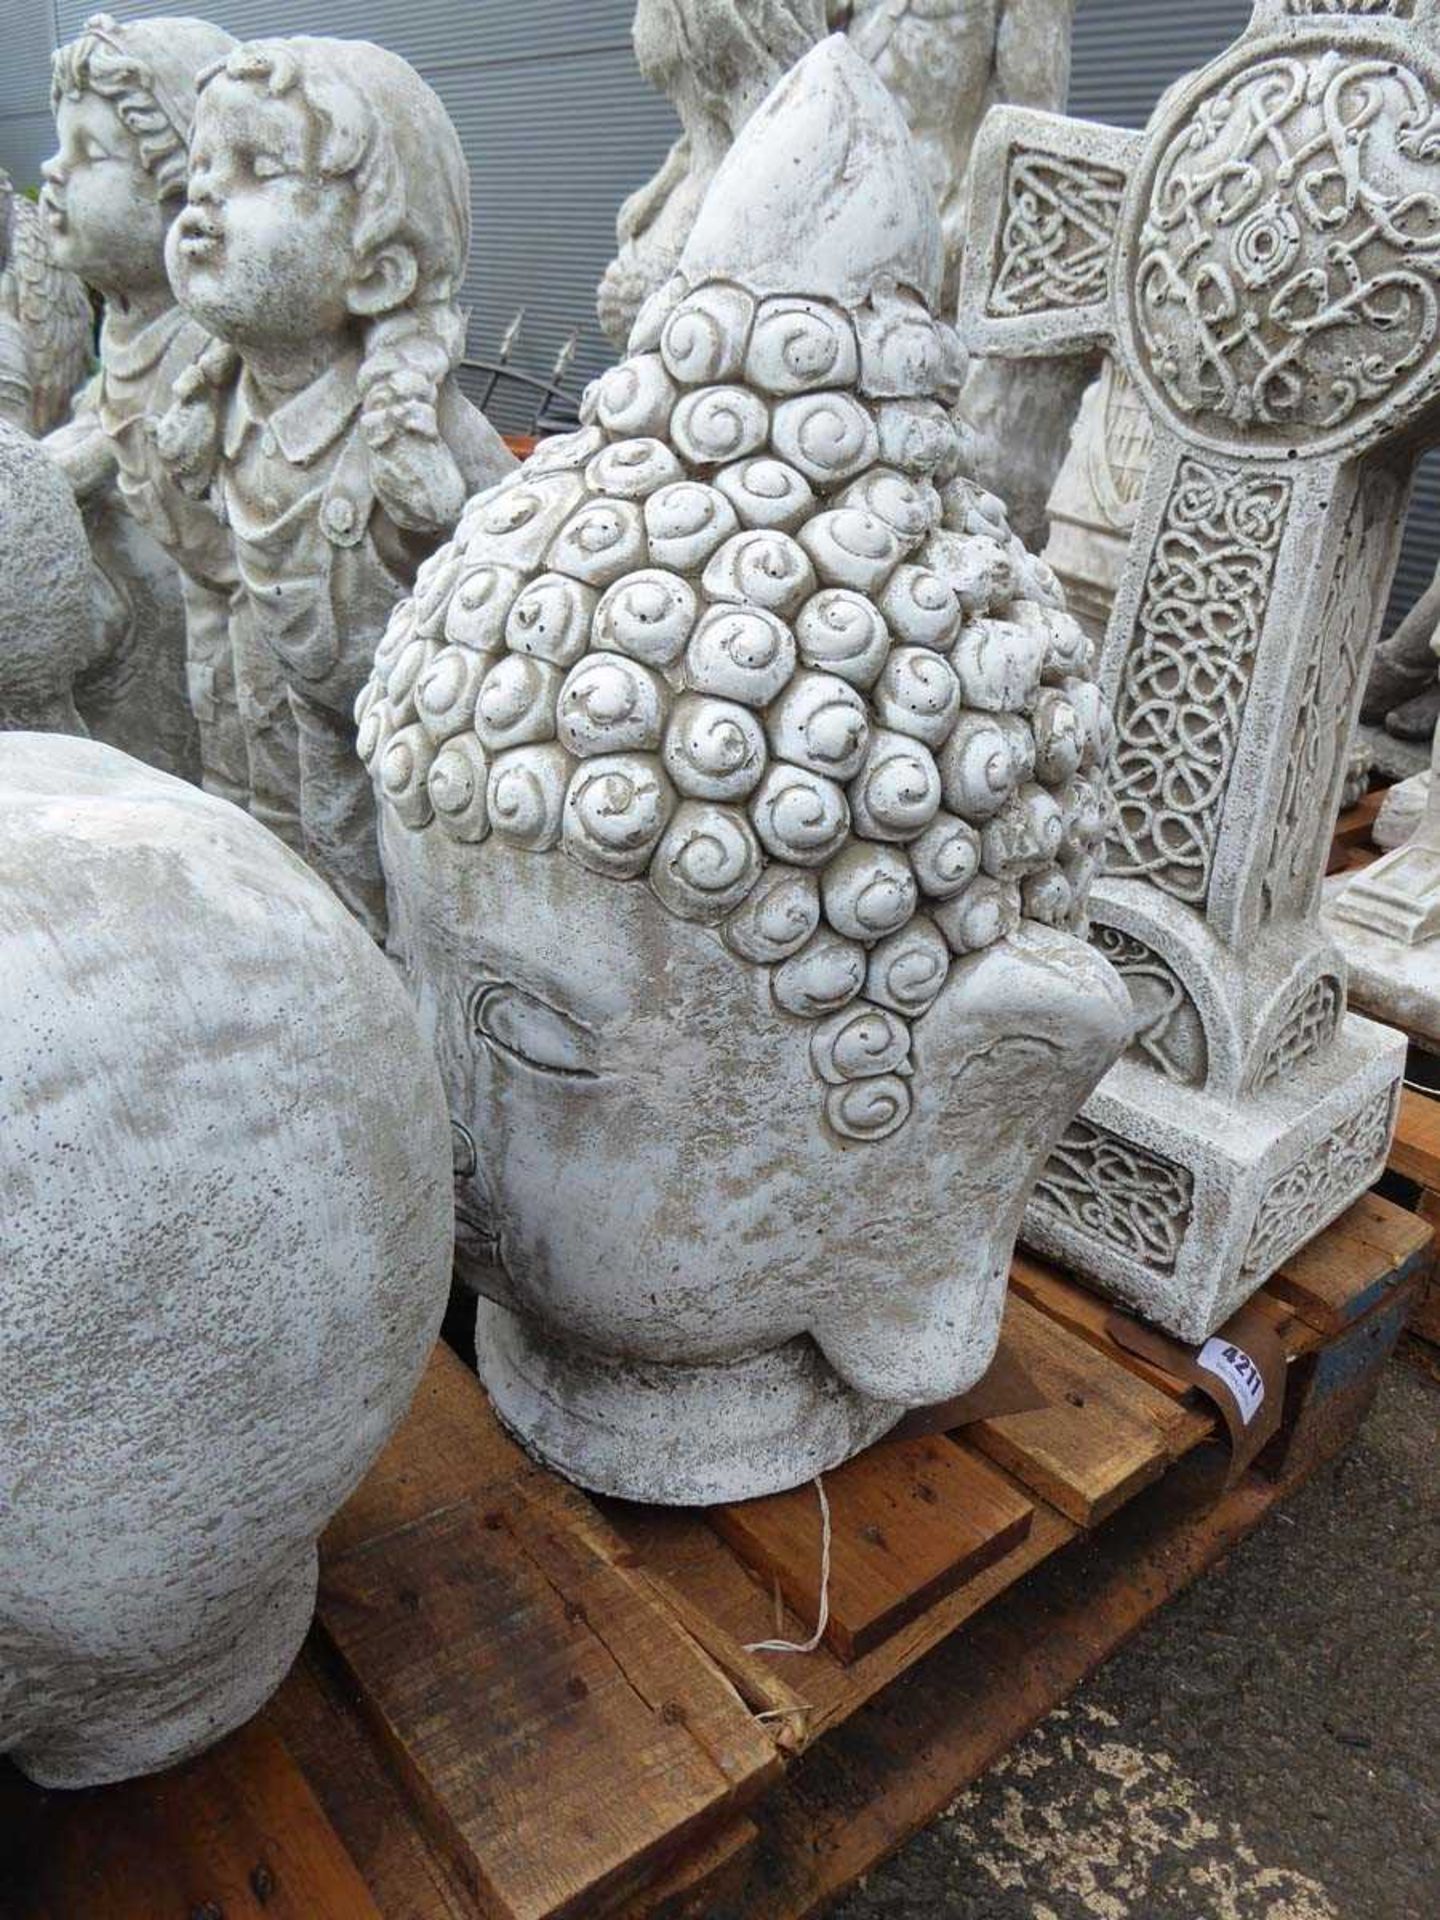 Concrete Buddha head